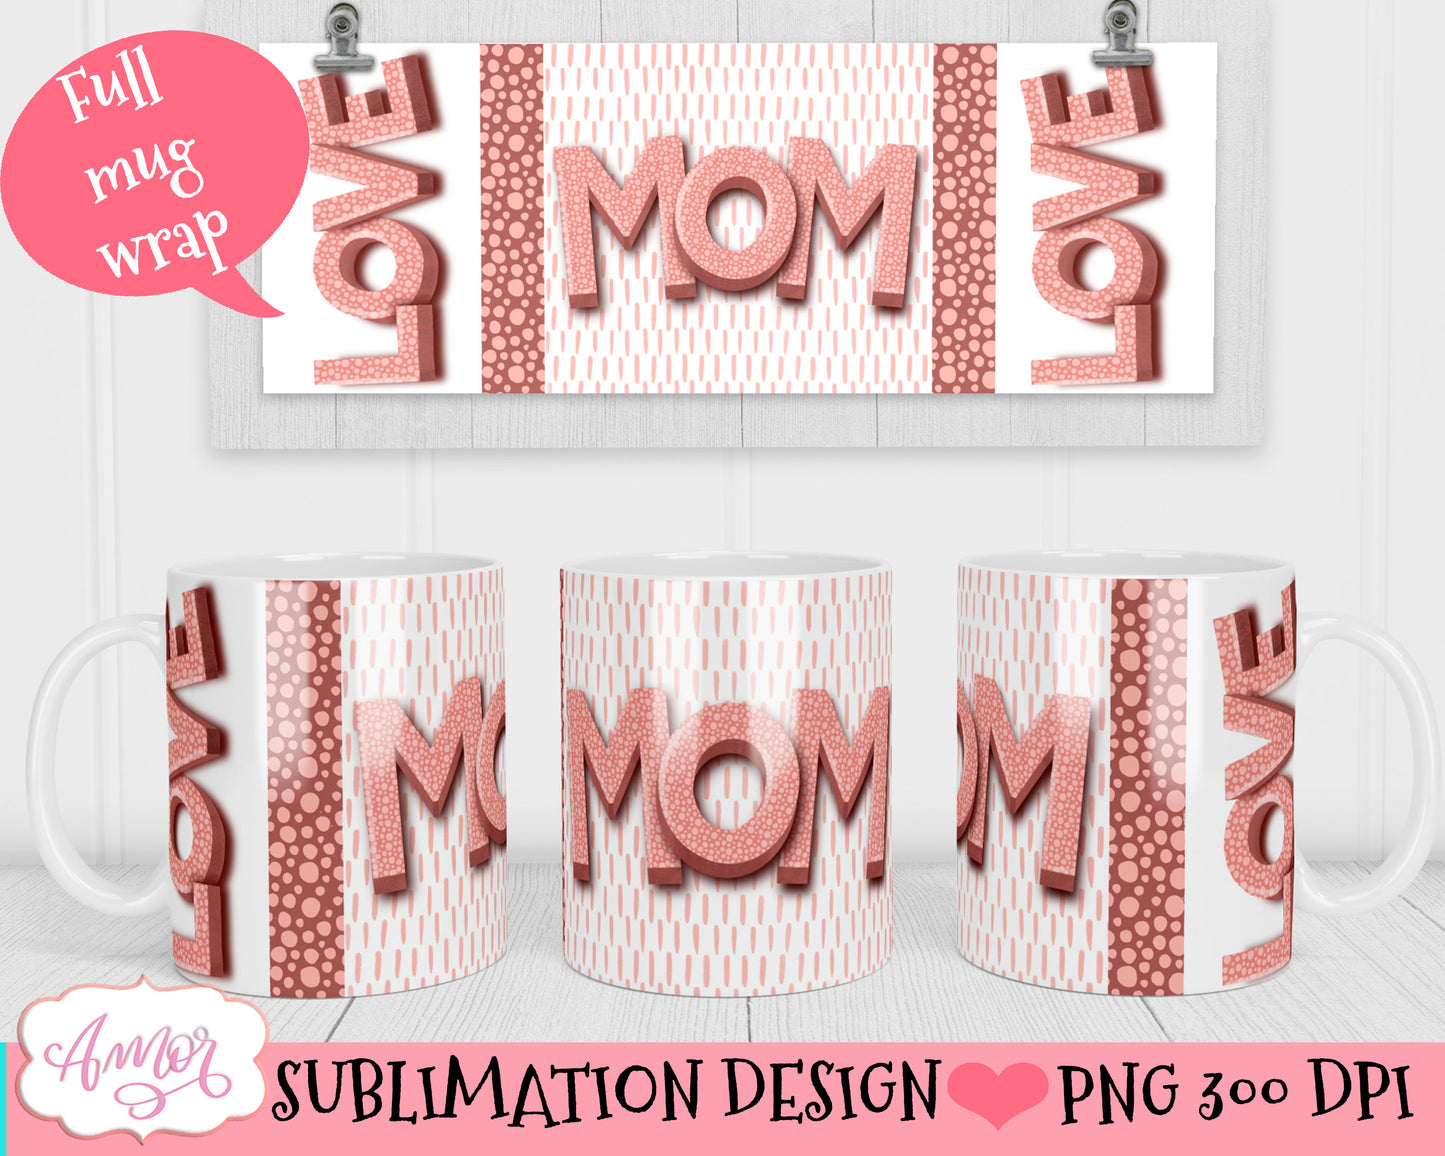 Love Mom mug wrap PNG for sublimation